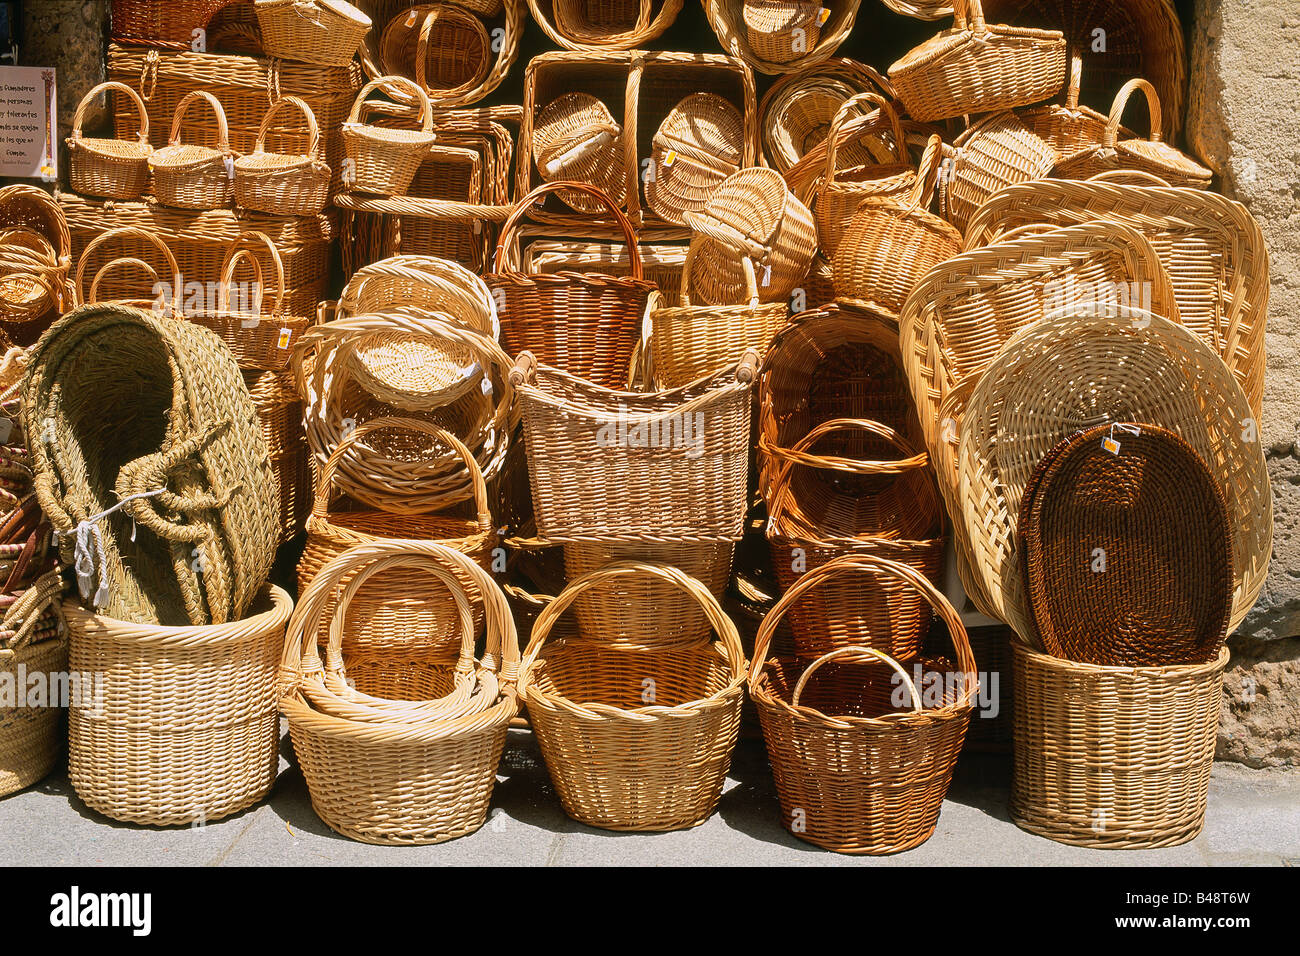 Spain - Madrid neighbourhood - Segovia - craftmanship - baskets Stock Photo